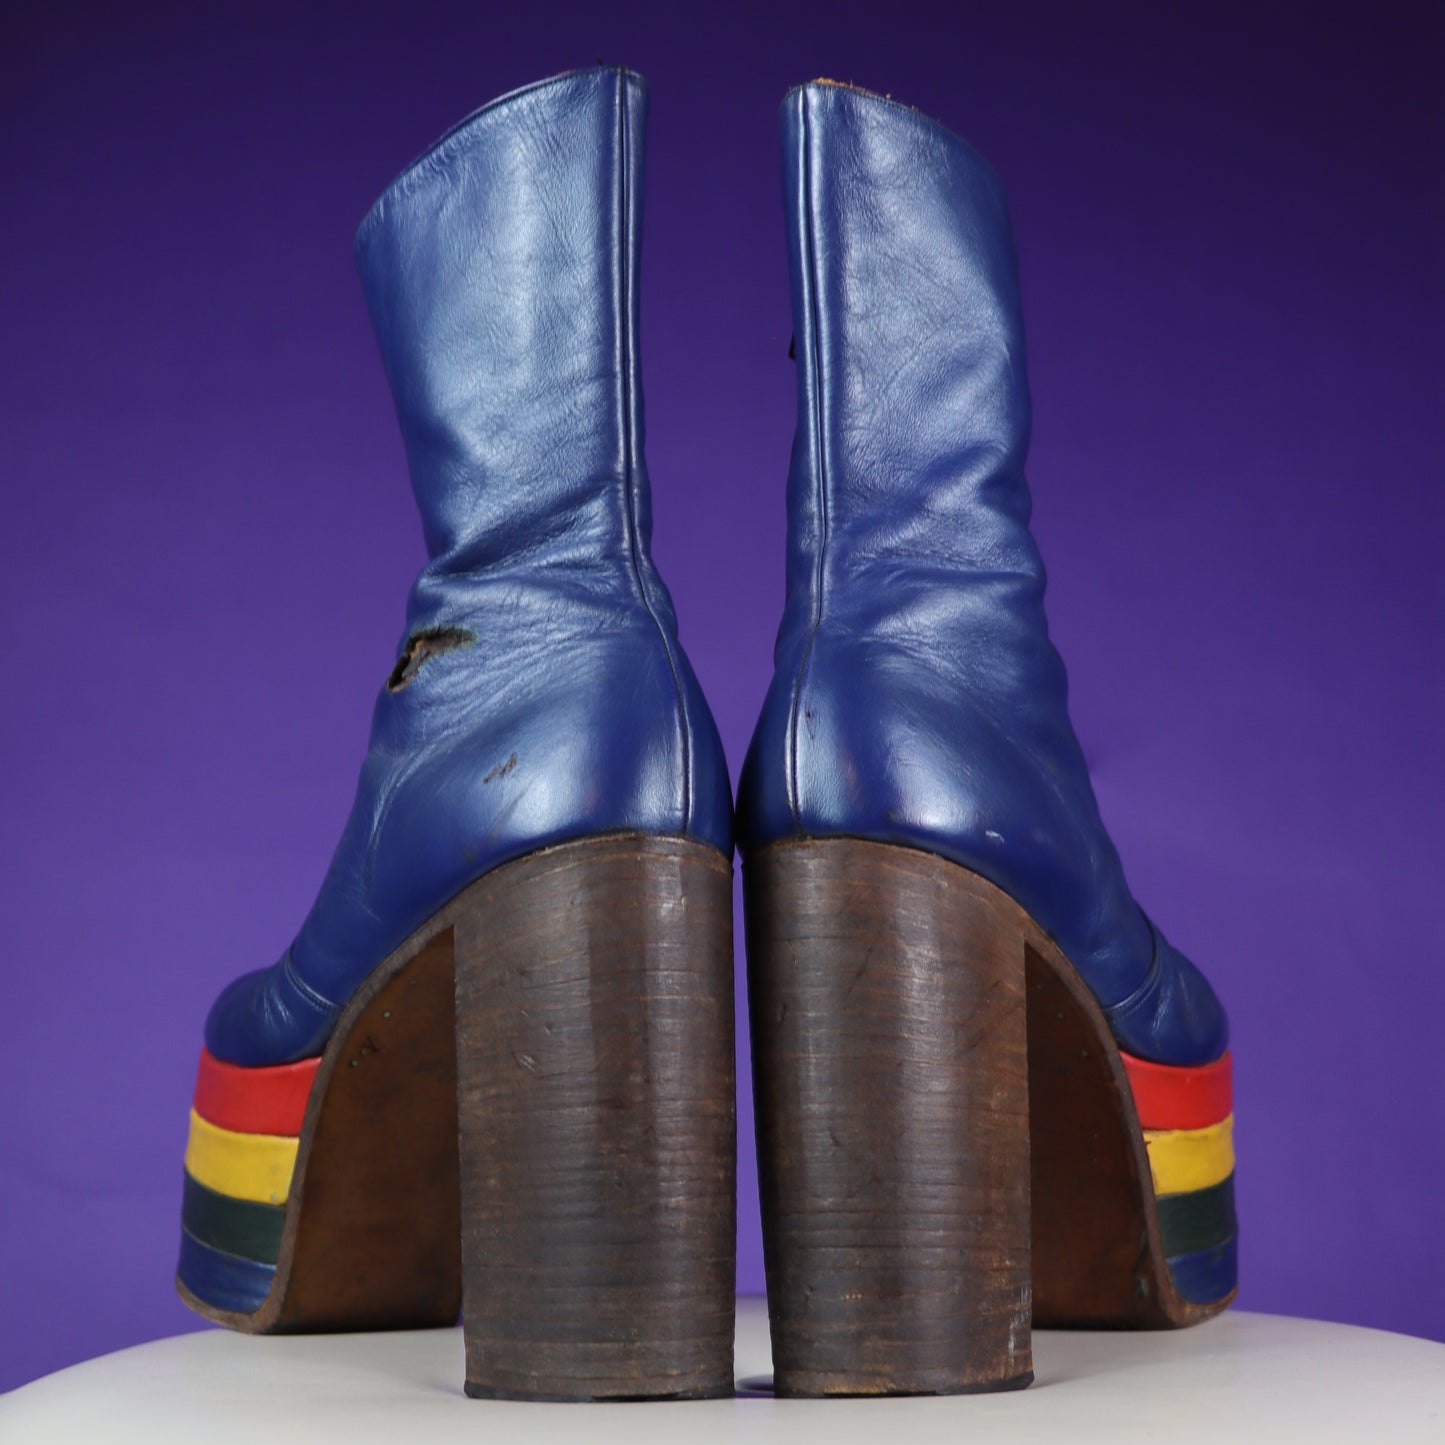 ULTIMATE Vintage 1970s Rainbow Stacks Platform Boots